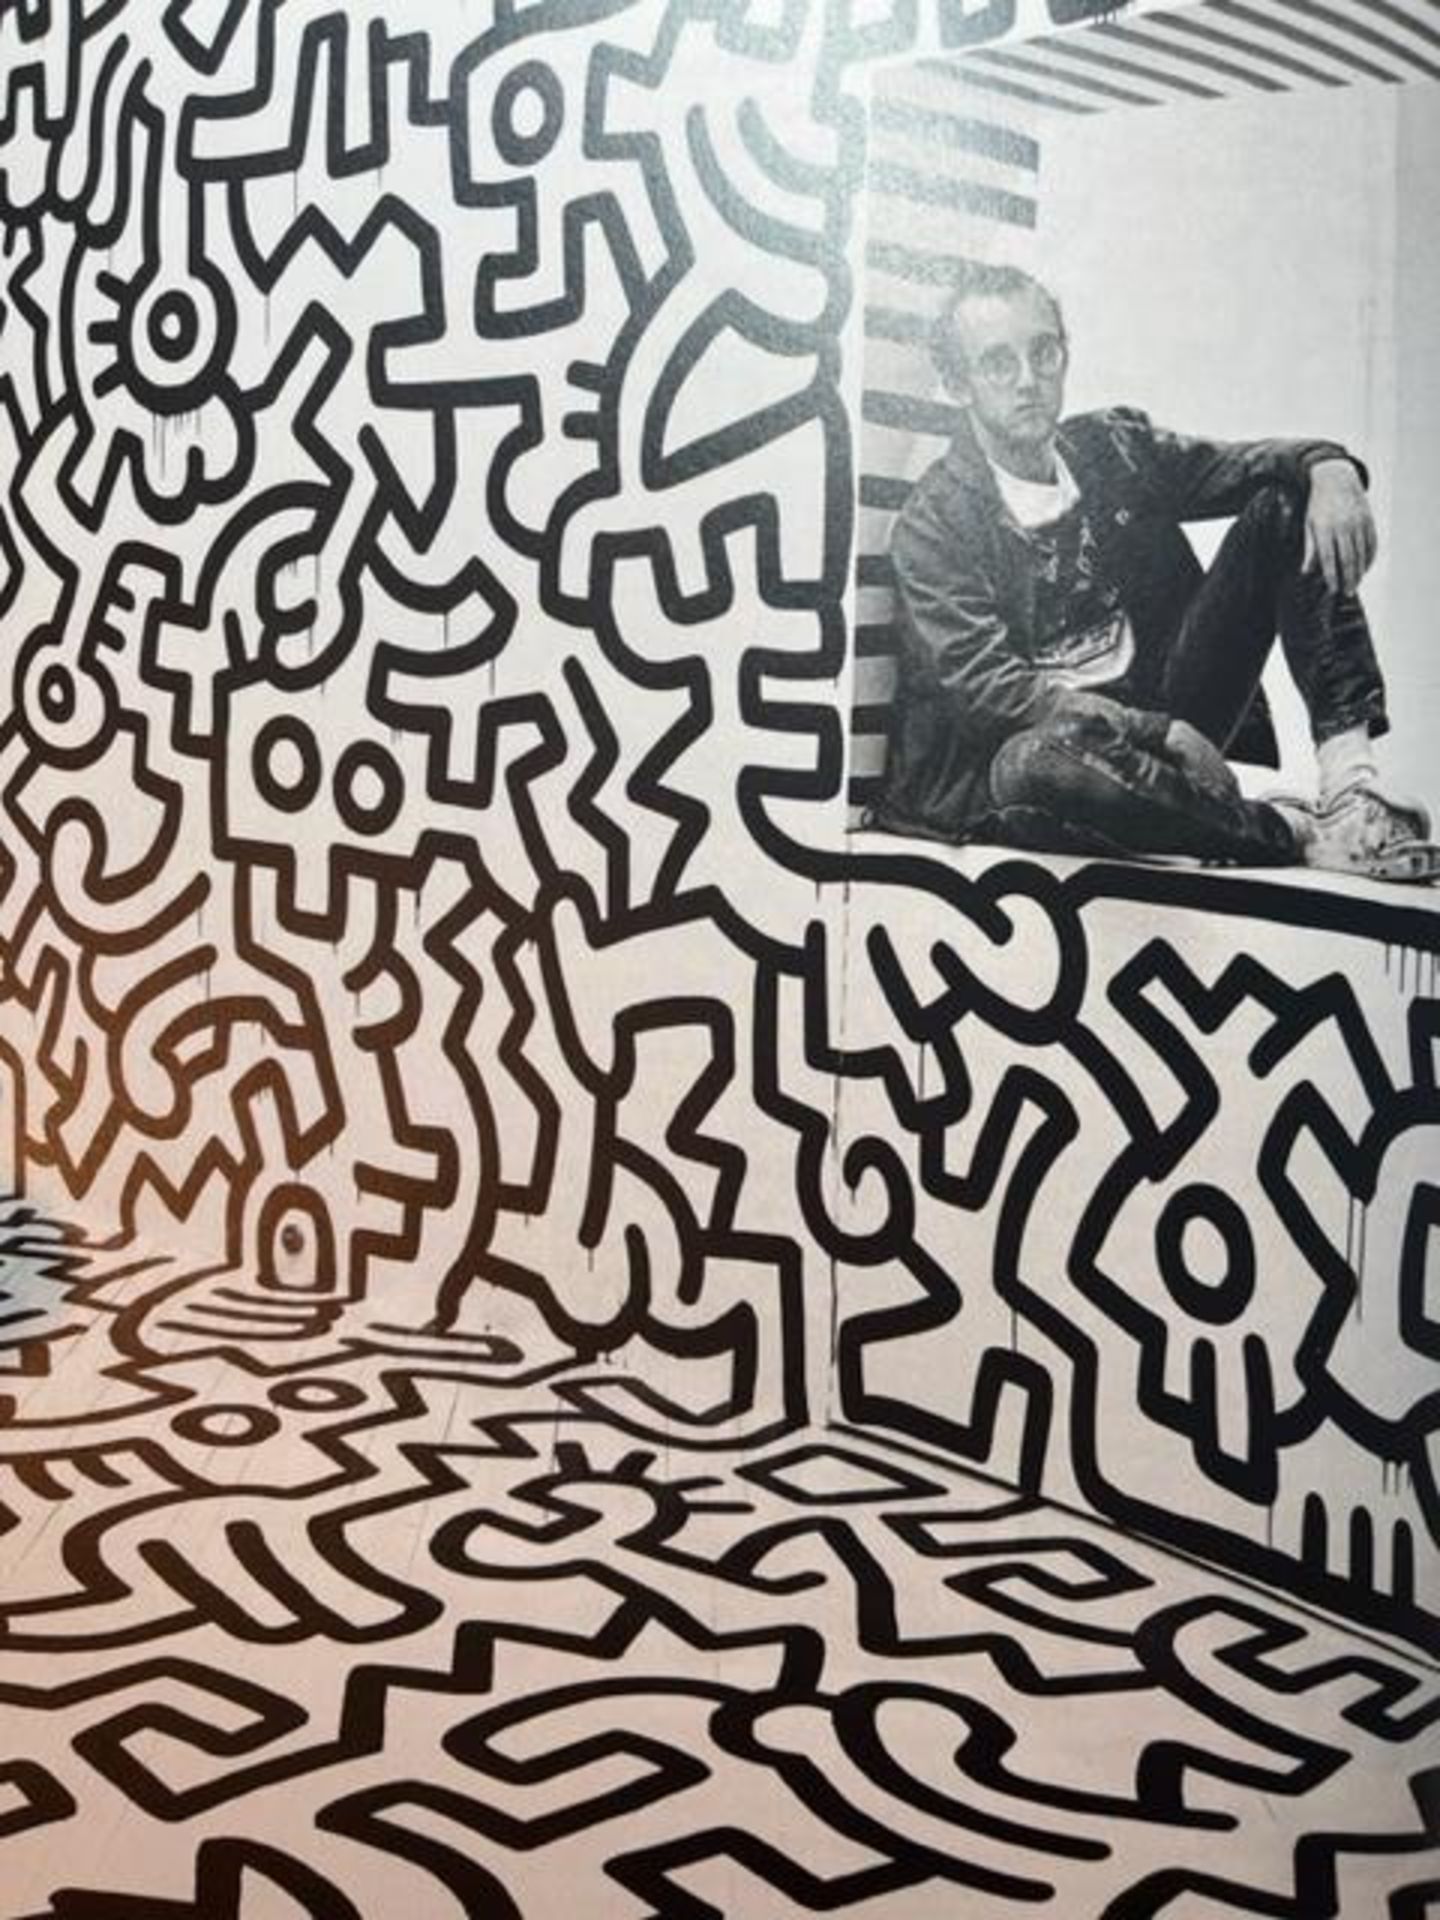 Keith Haring "Pop Shop" Print.